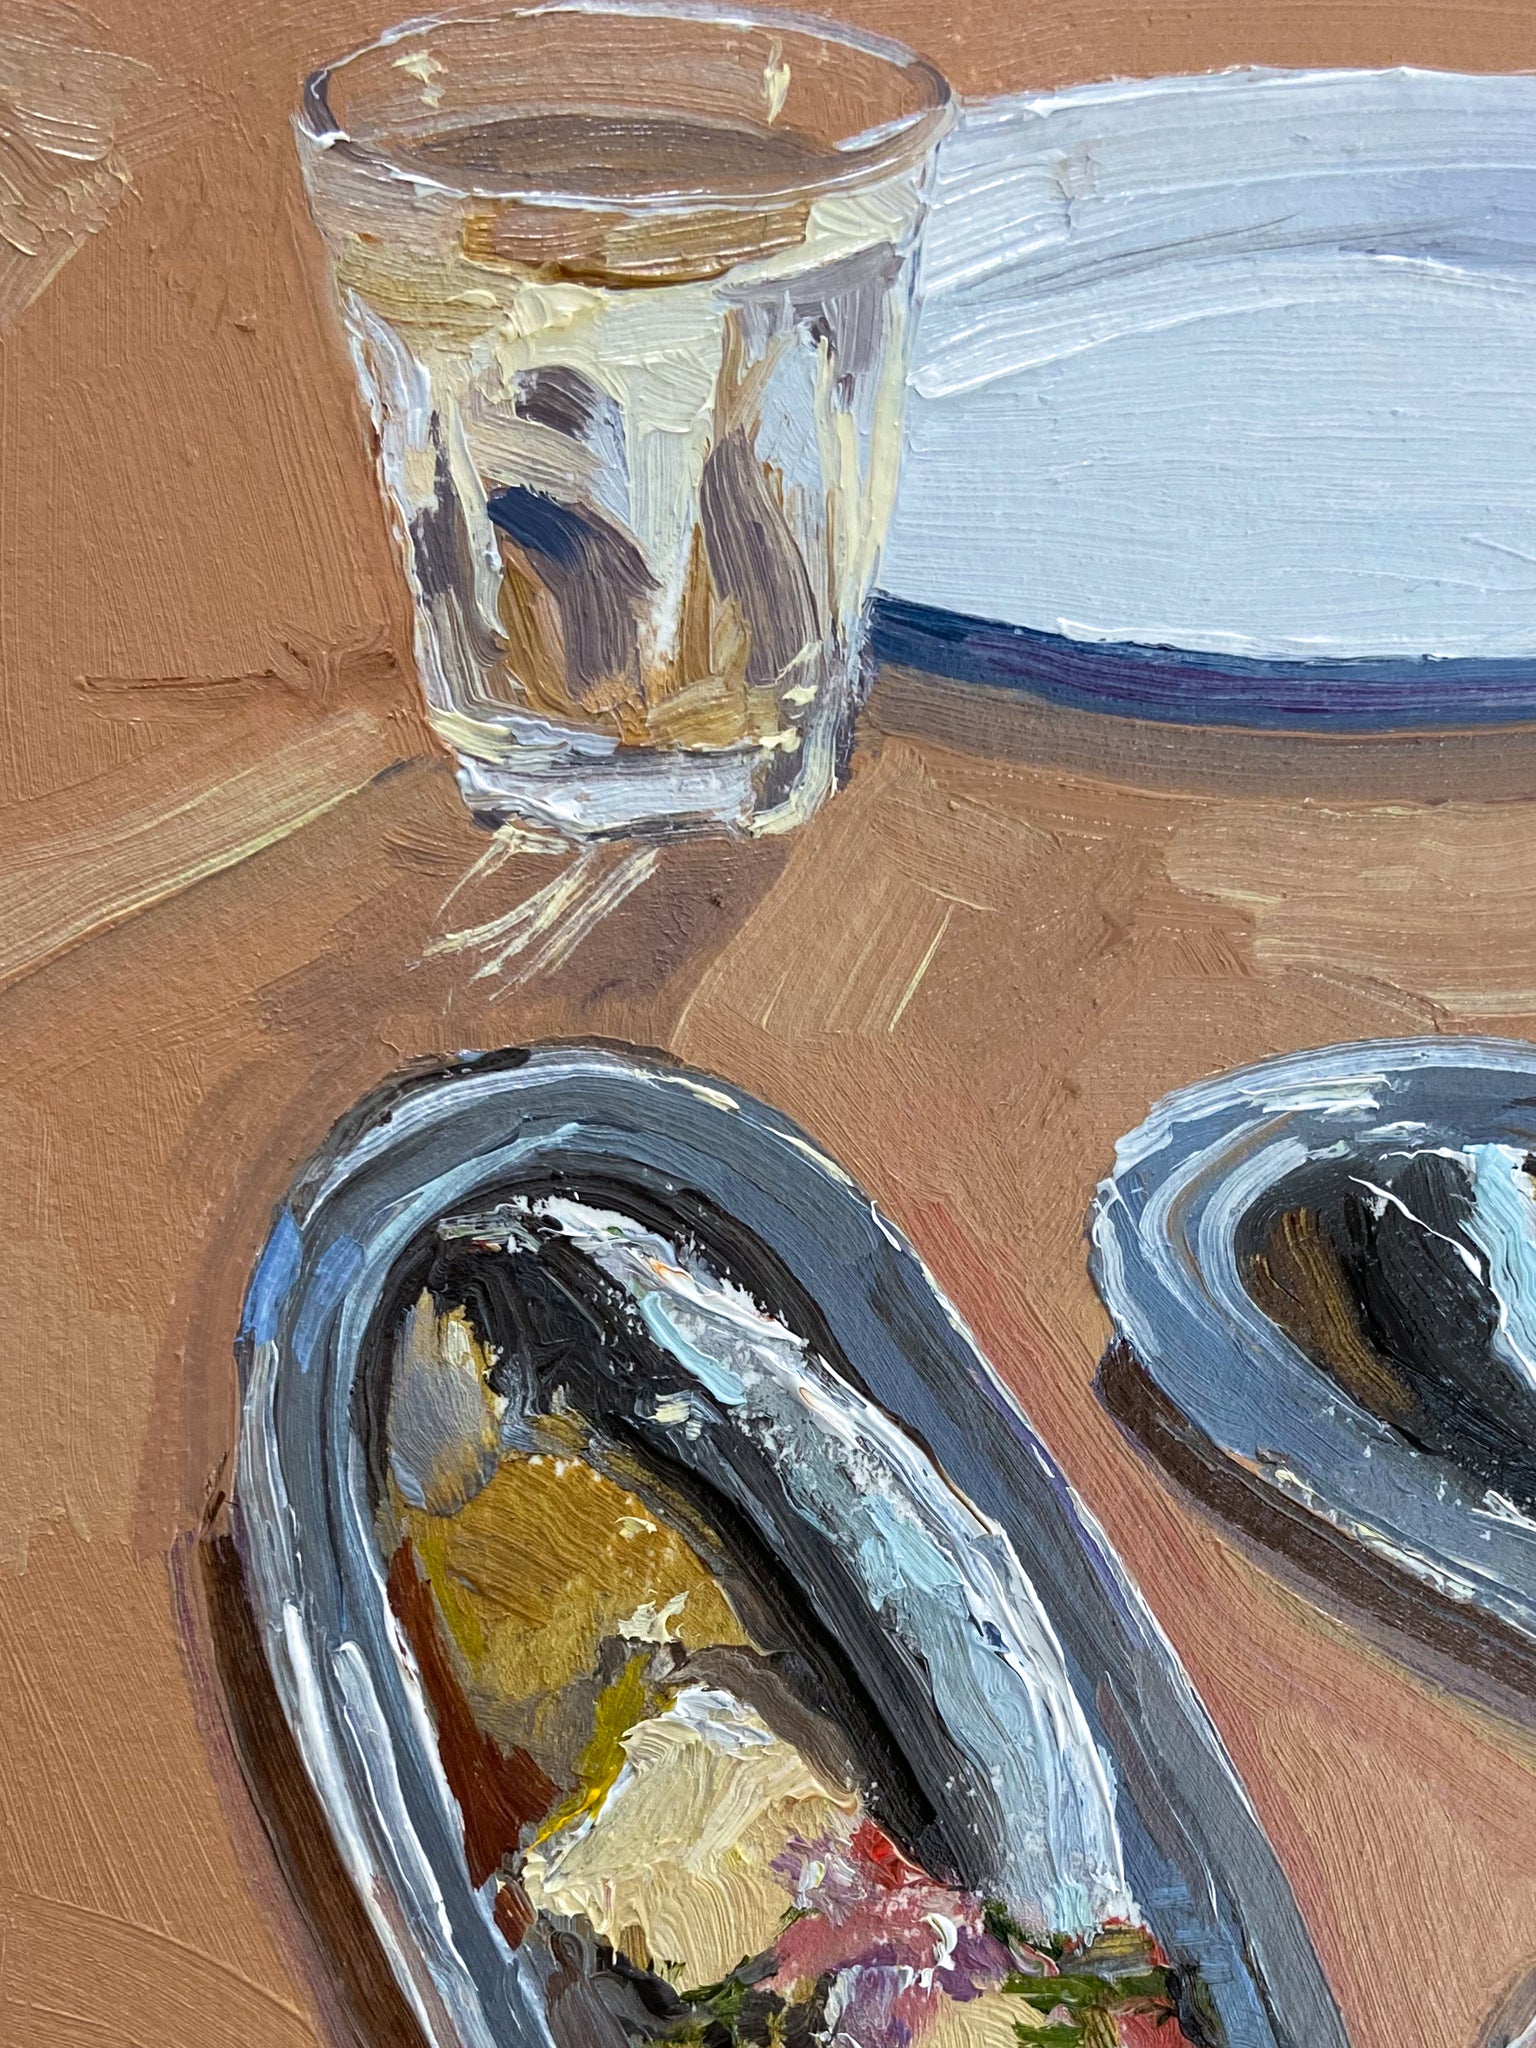 September 28: White Wine and Sardines